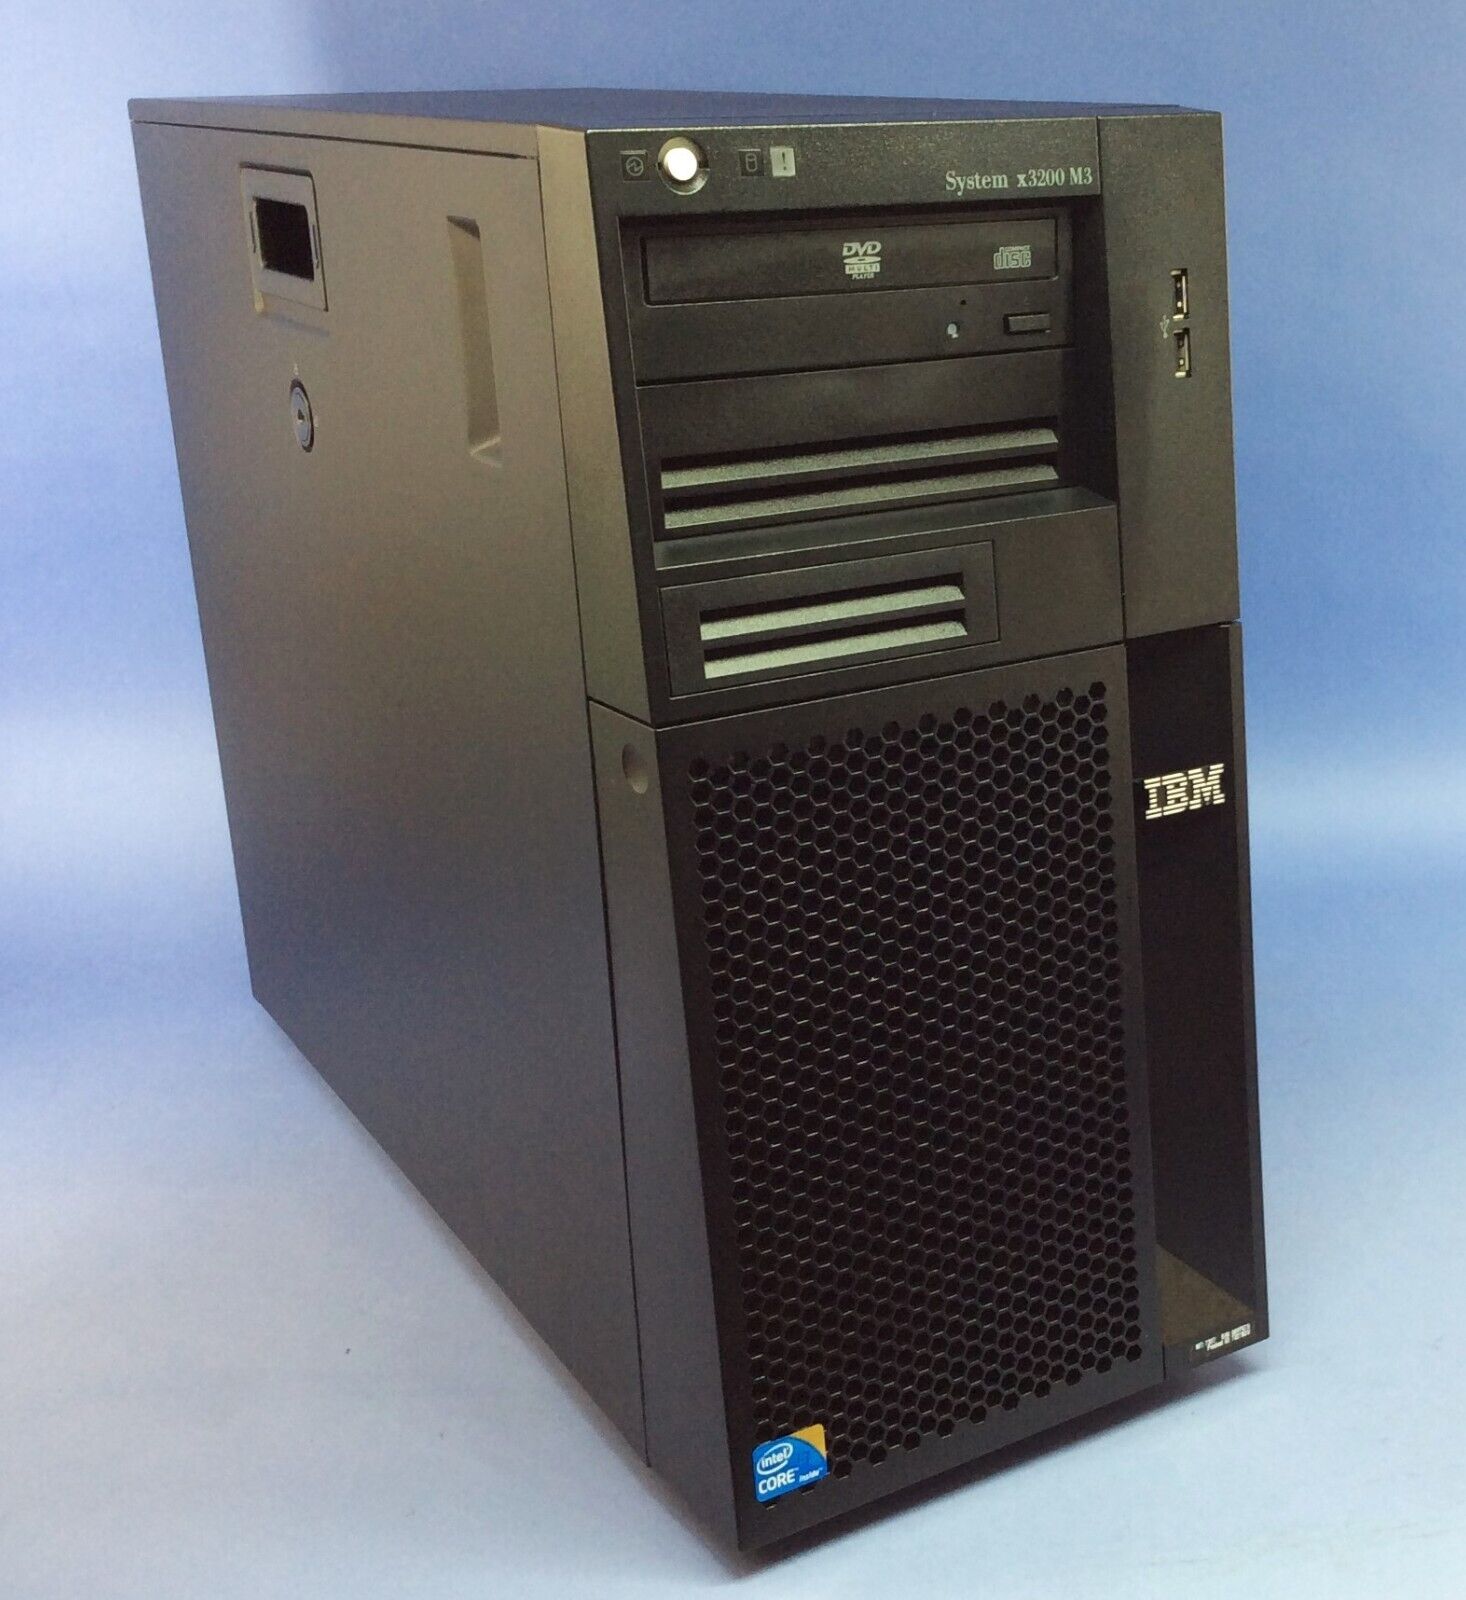 IBM SYSTEM x3200 M3 Tower- Intel i3 540 @ 3.07GHz, 4GB, 500GB HHD